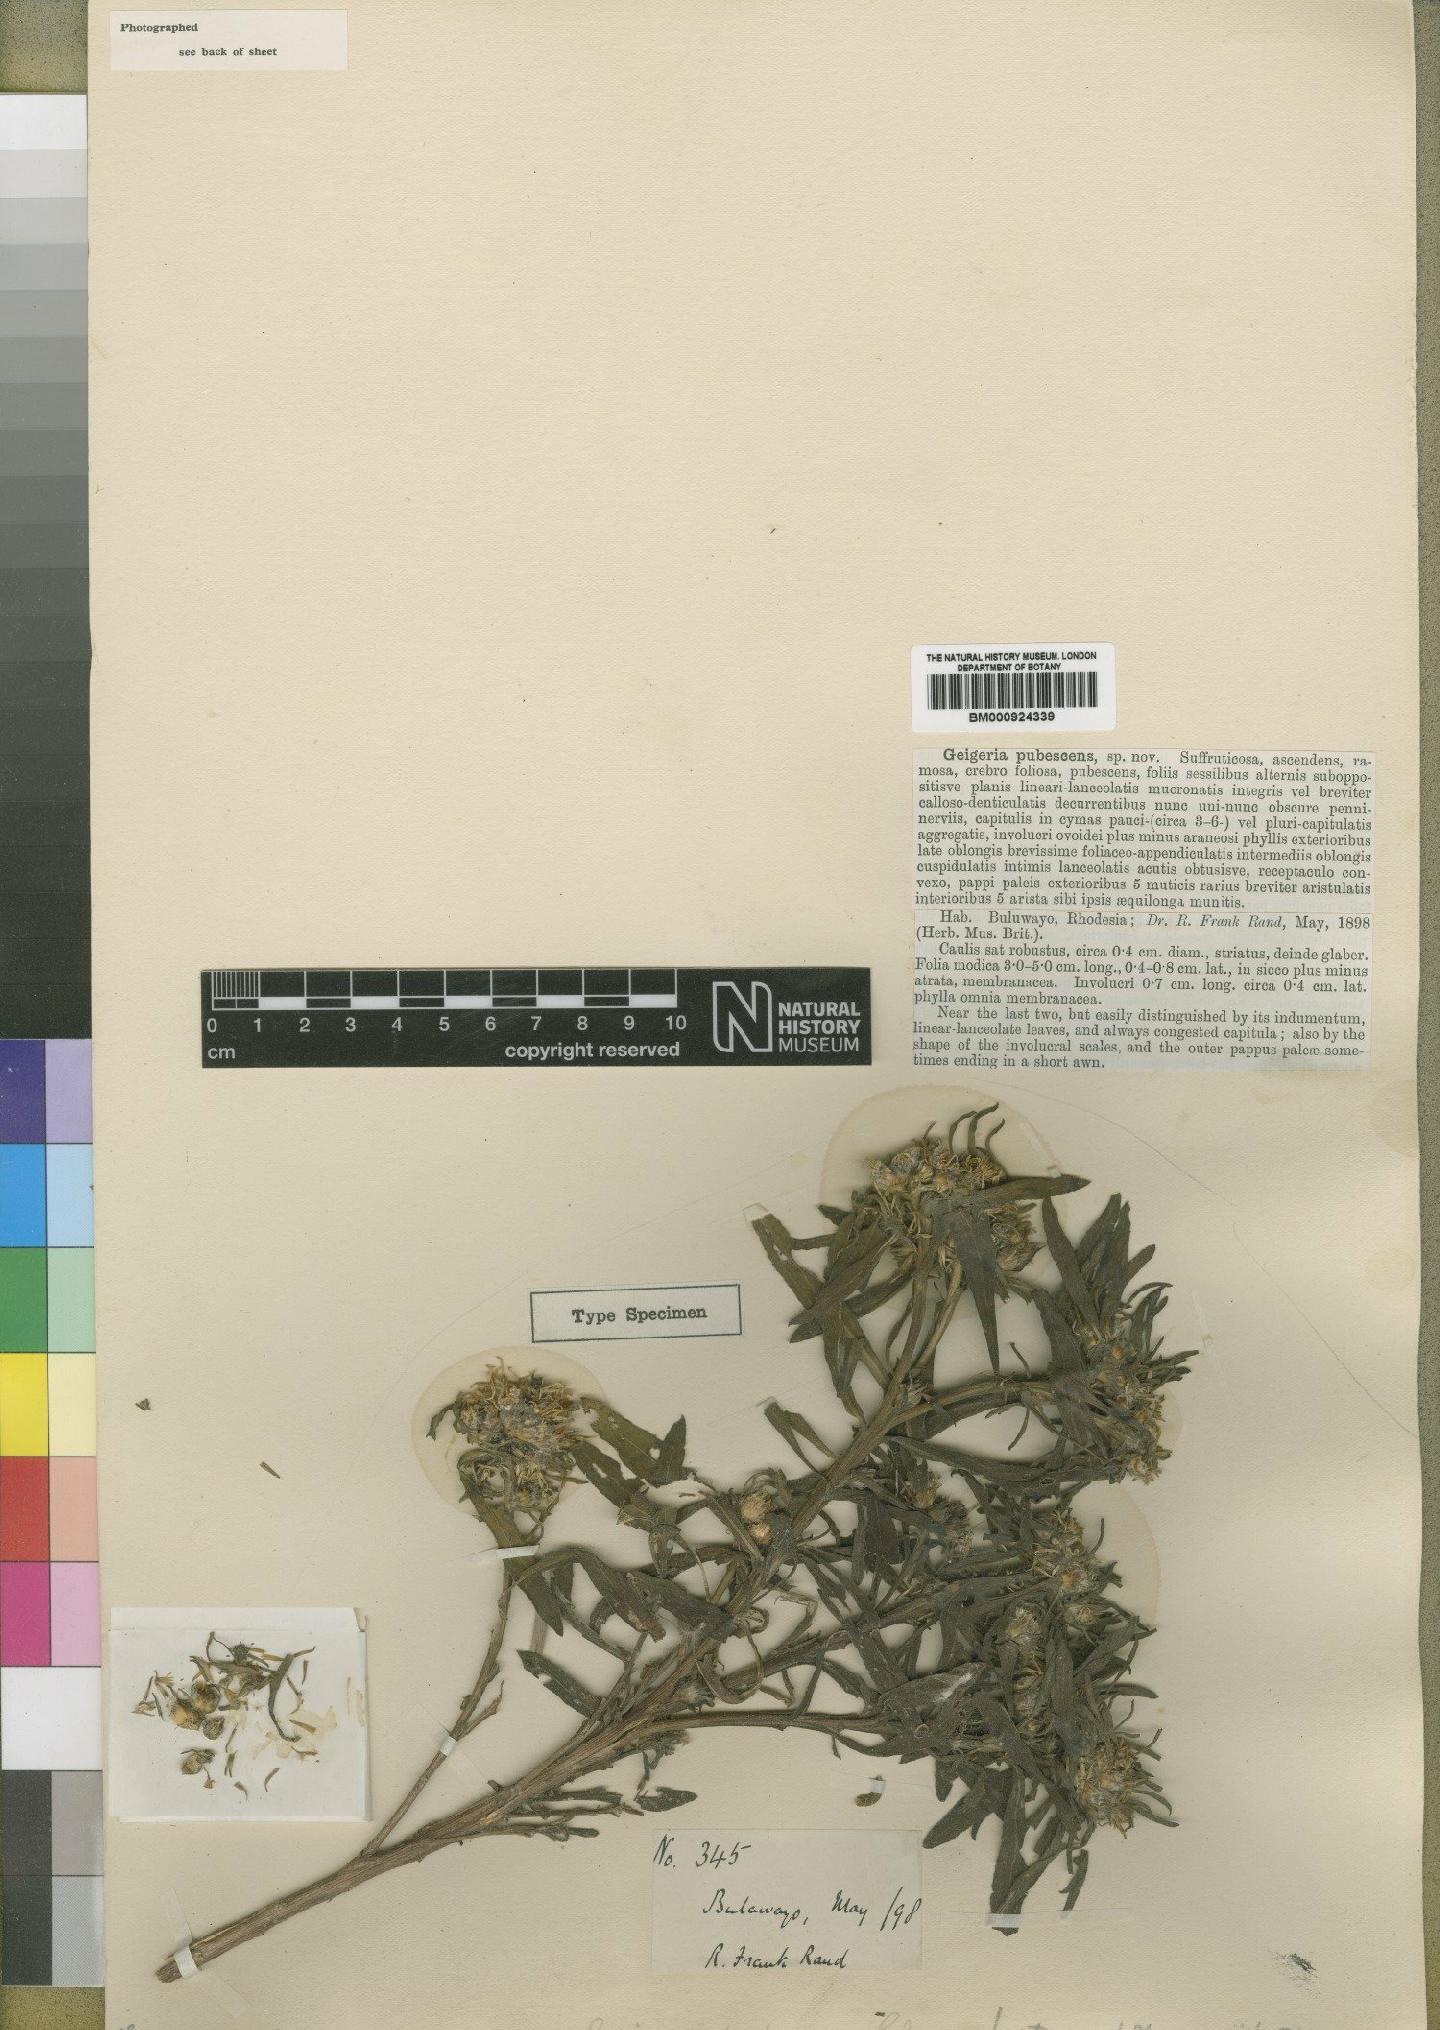 To NHMUK collection (Geigeria pubescens Moore; Type; NHMUK:ecatalogue:4529367)